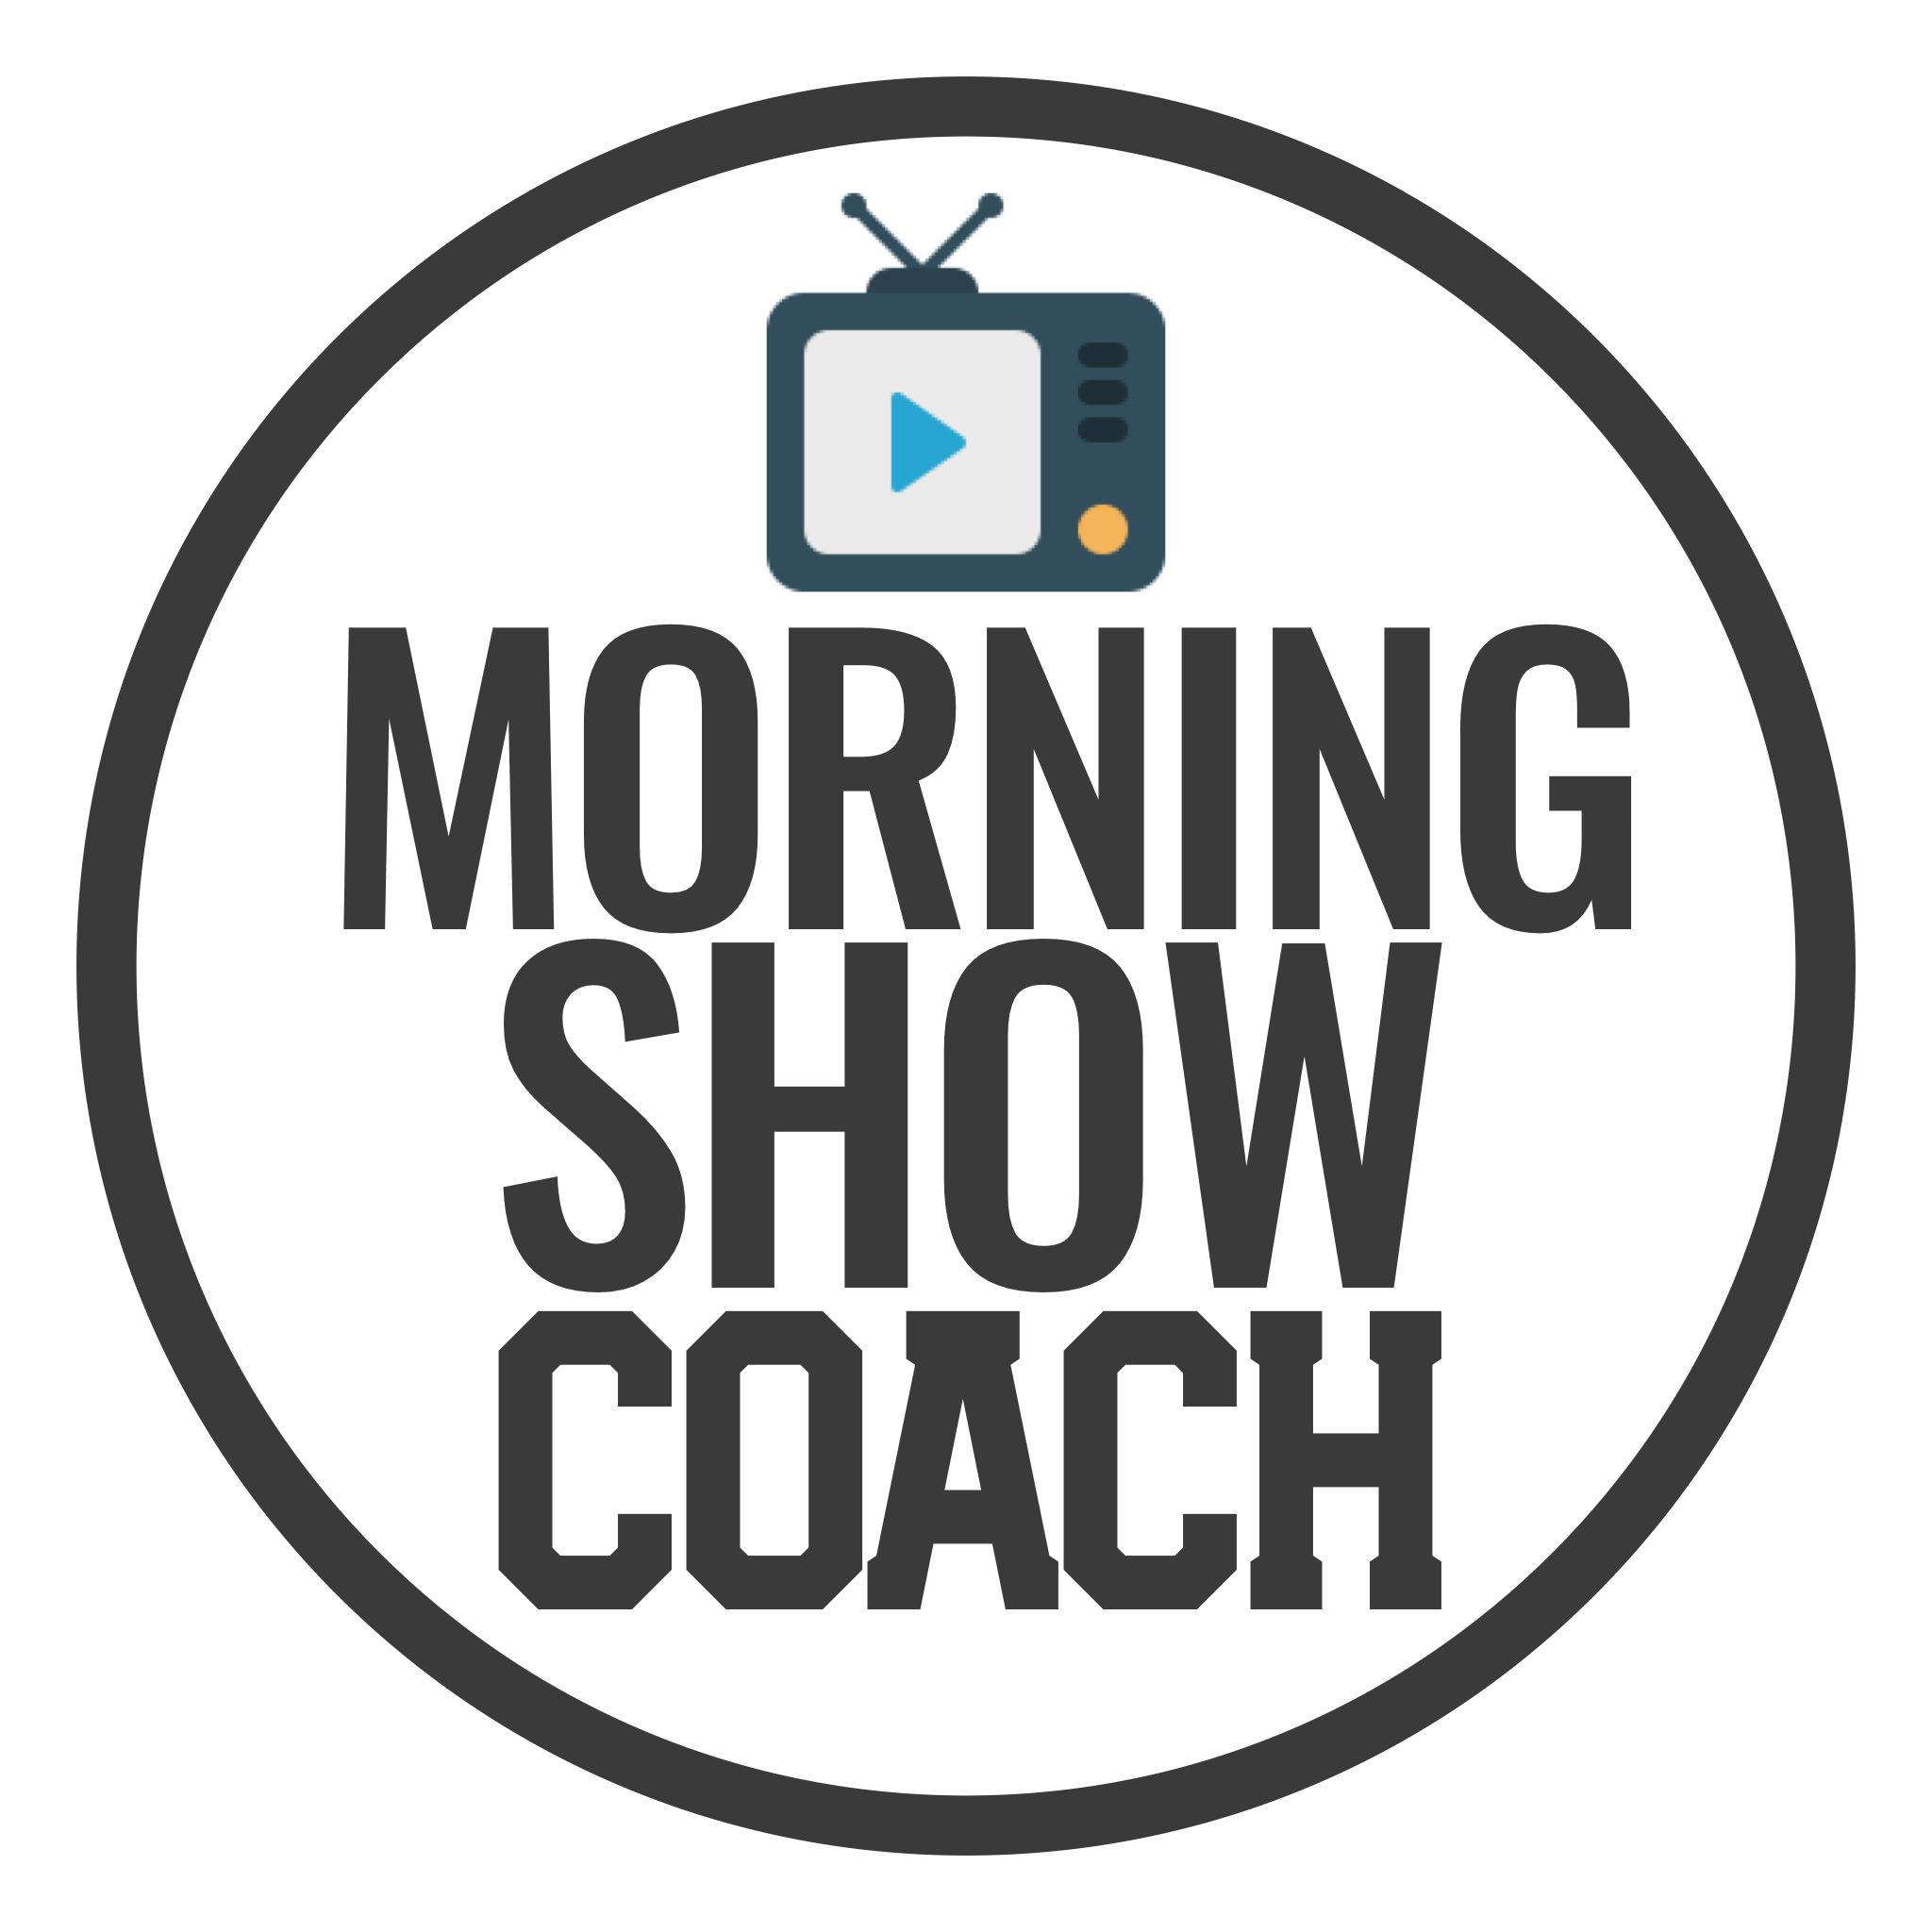 Morning Show Coach